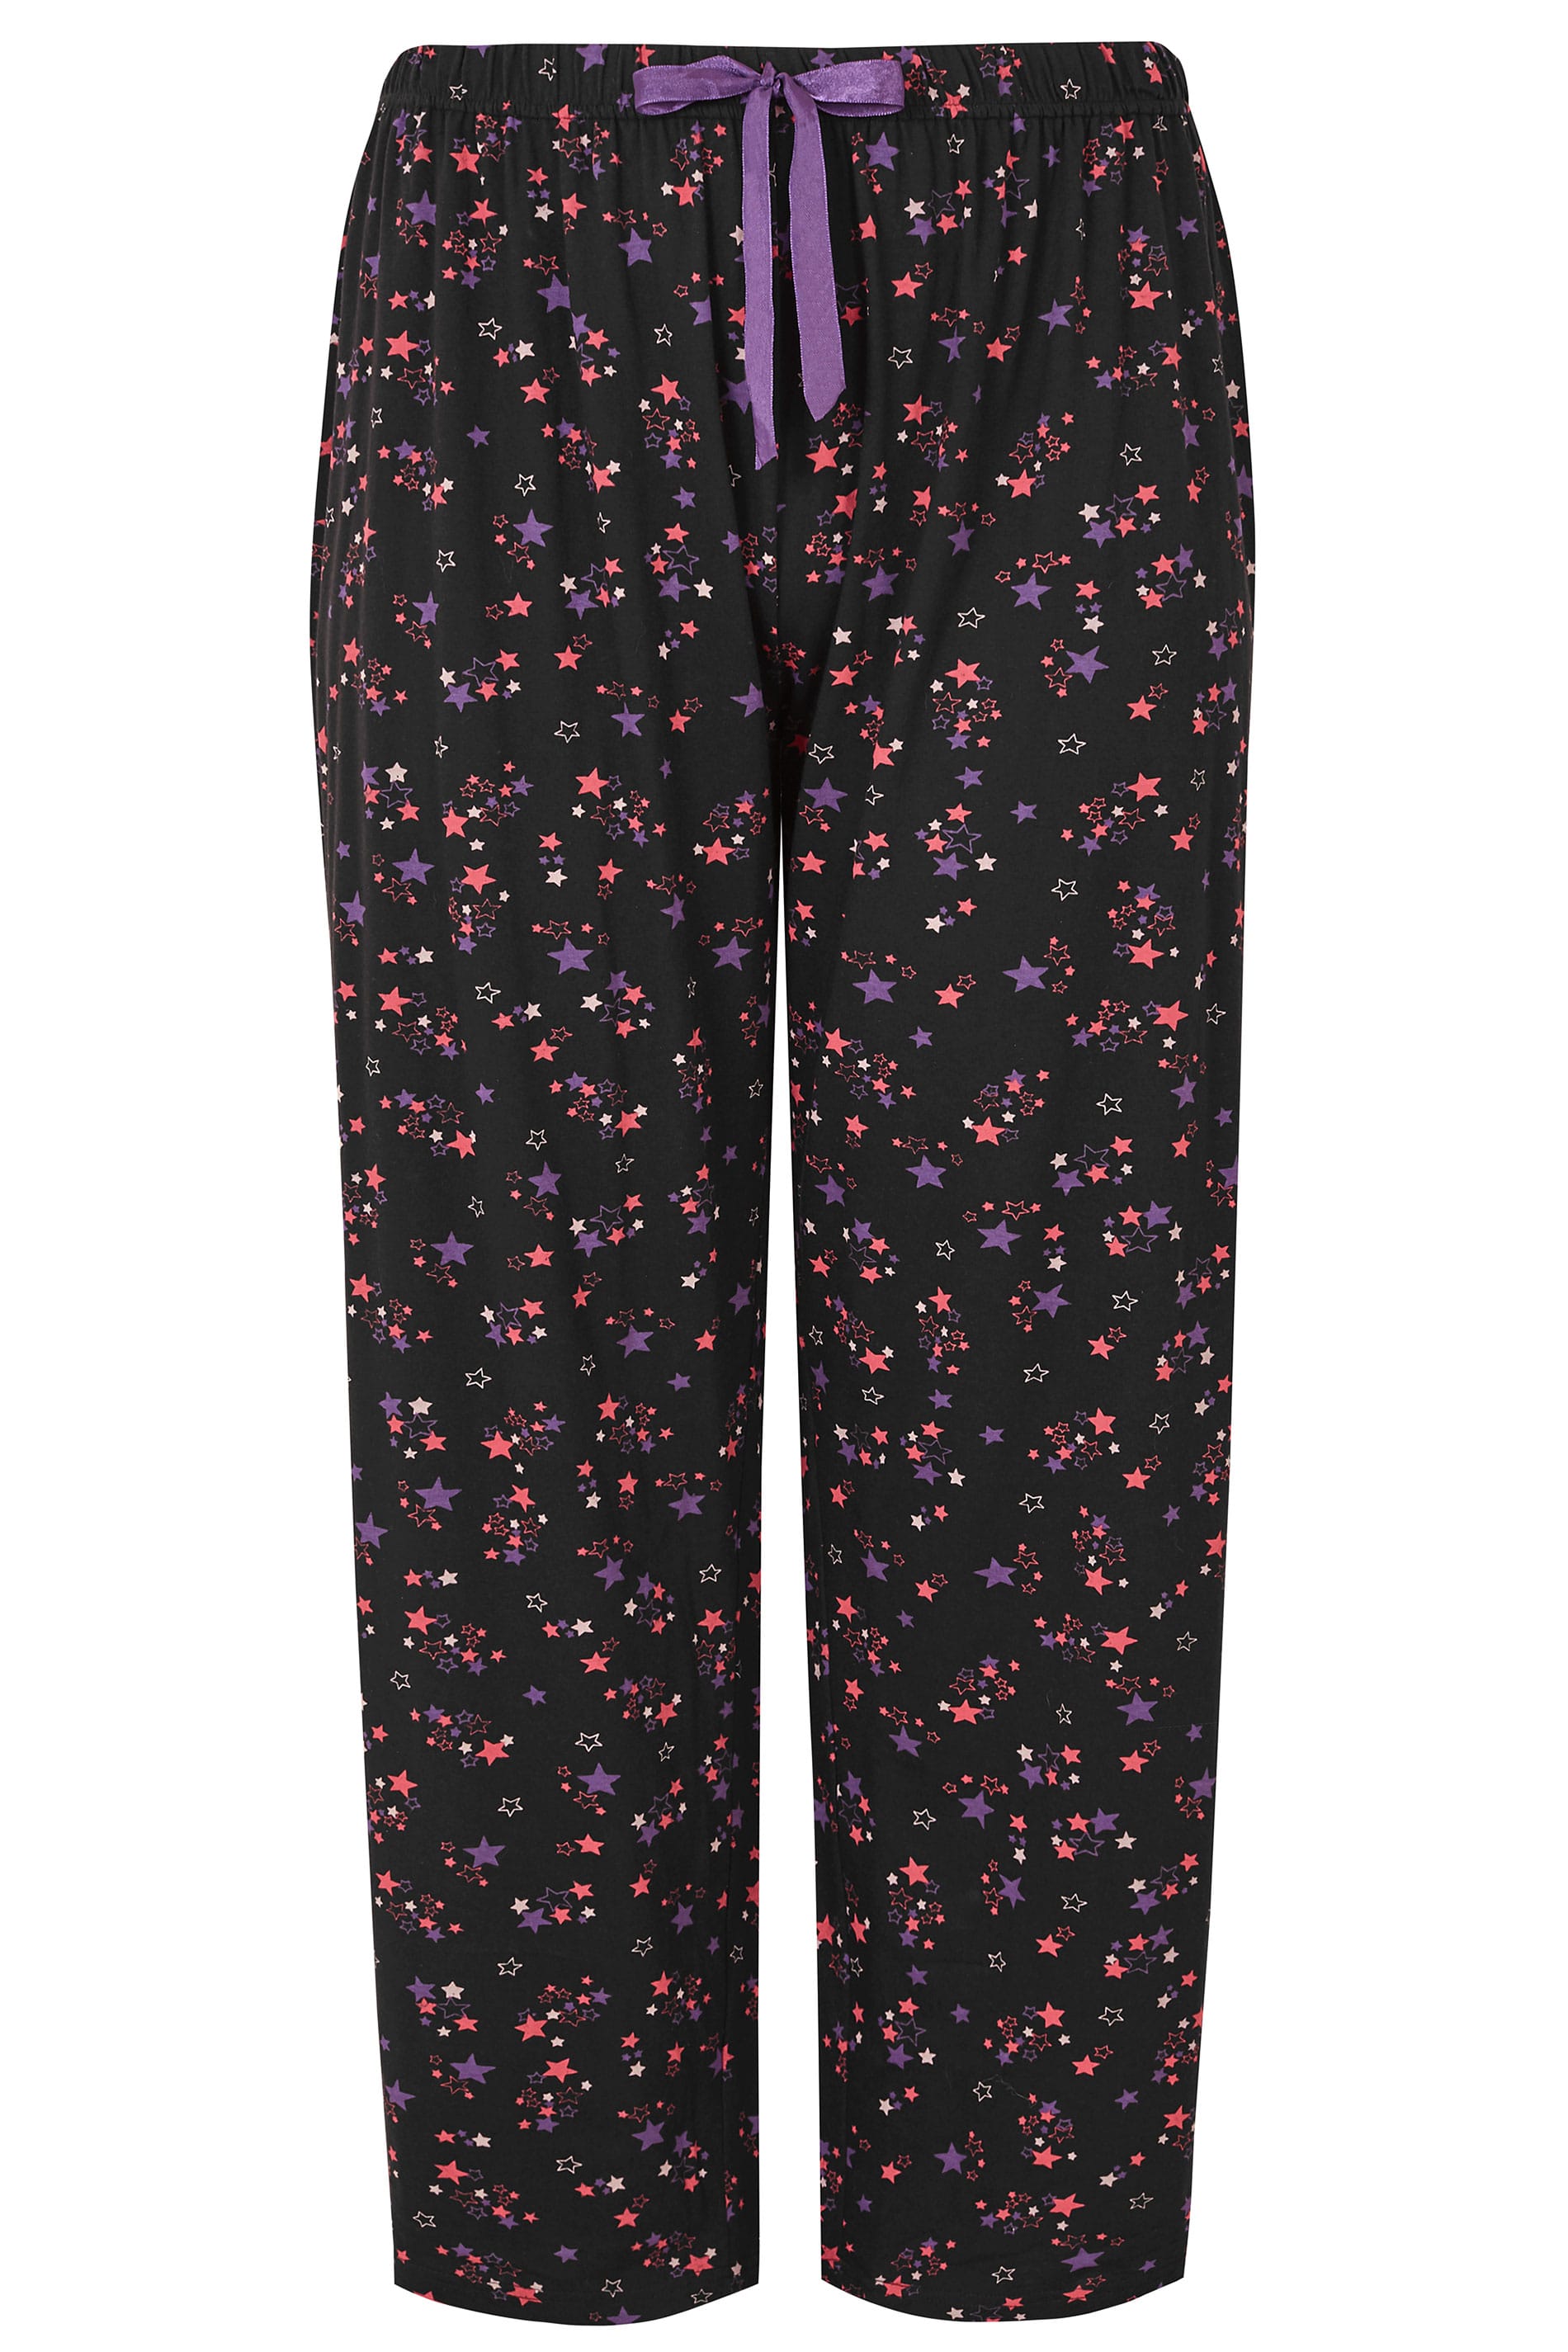 Black Star Print Pyjama Bottoms Plus Size 16 To 36